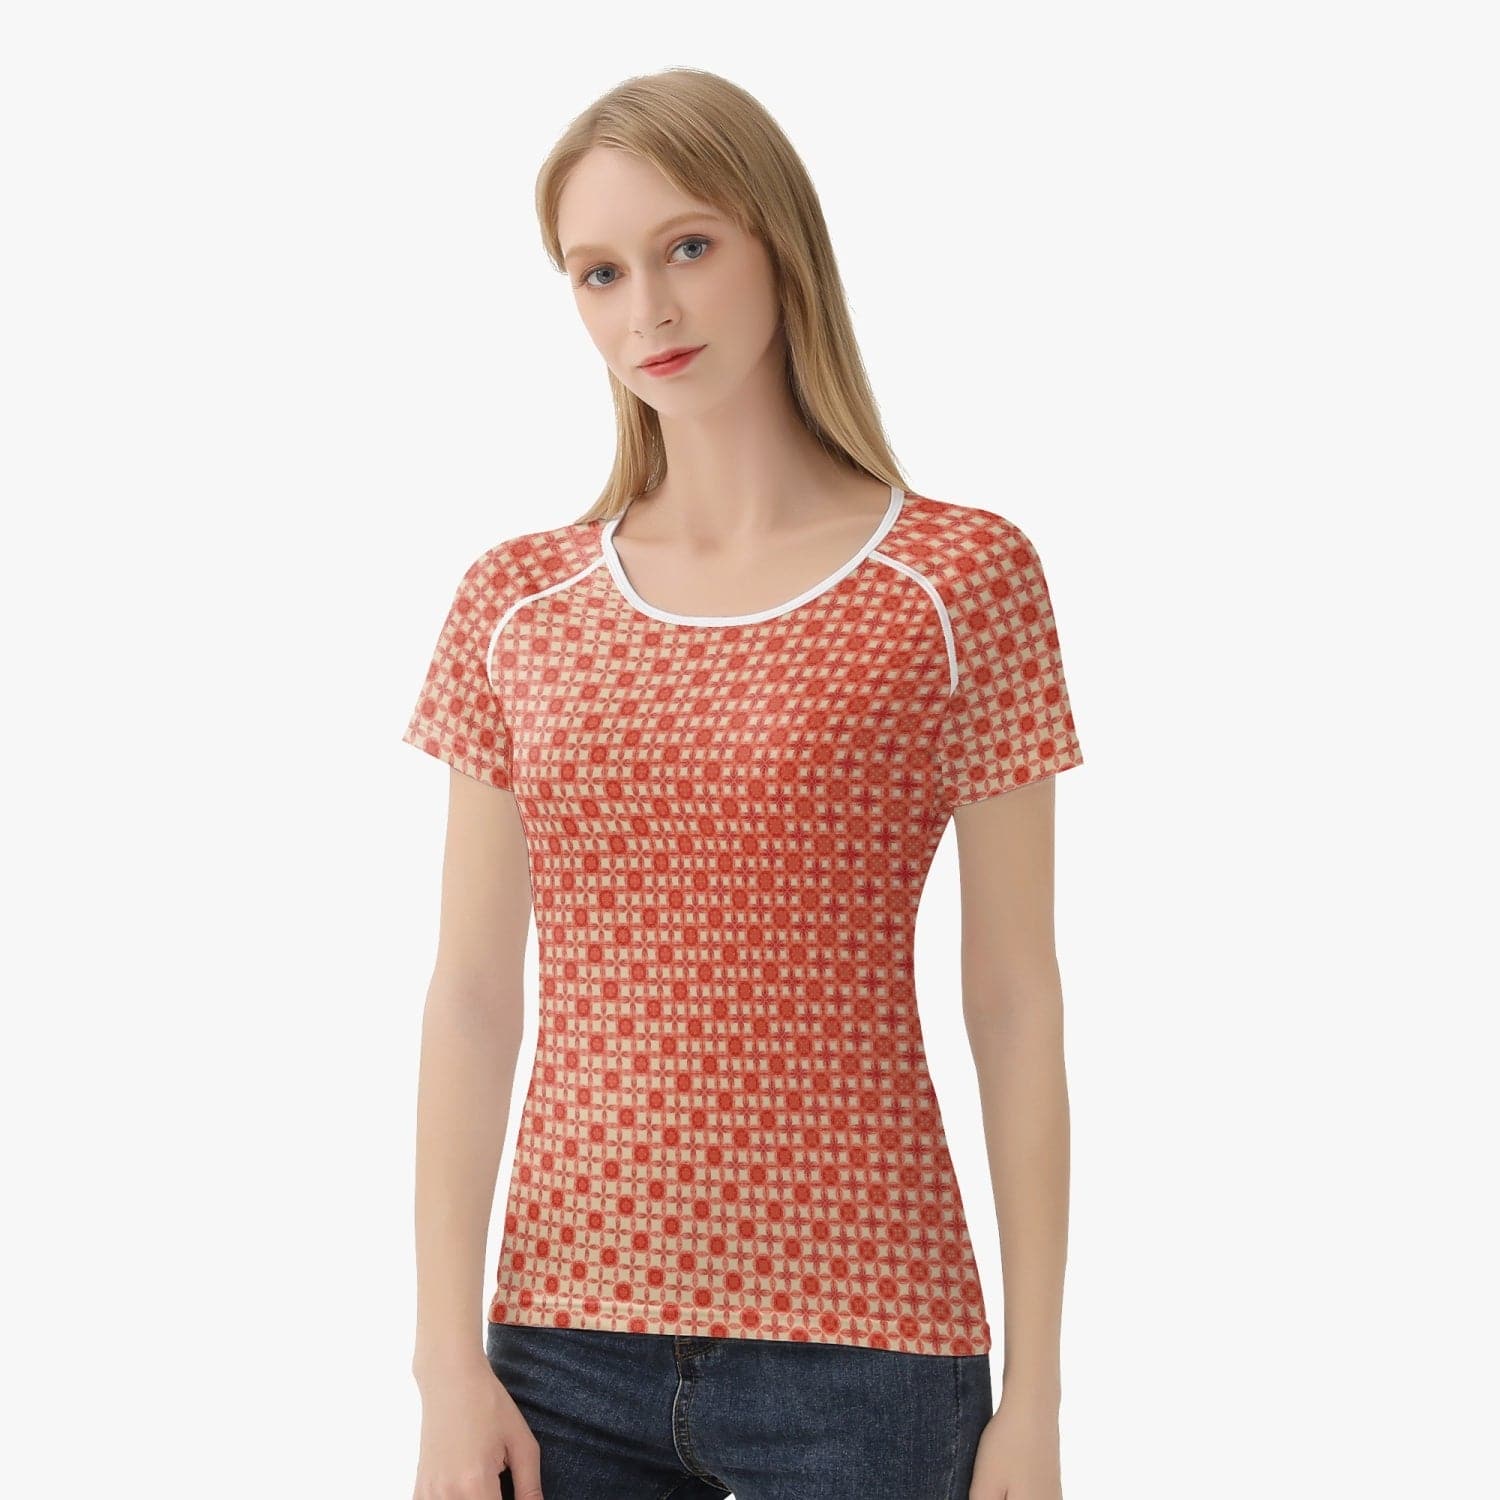 Soft Red Buttercup, Handmade Hot Women sports/yoga T-shirt , by Sensus Studio Design